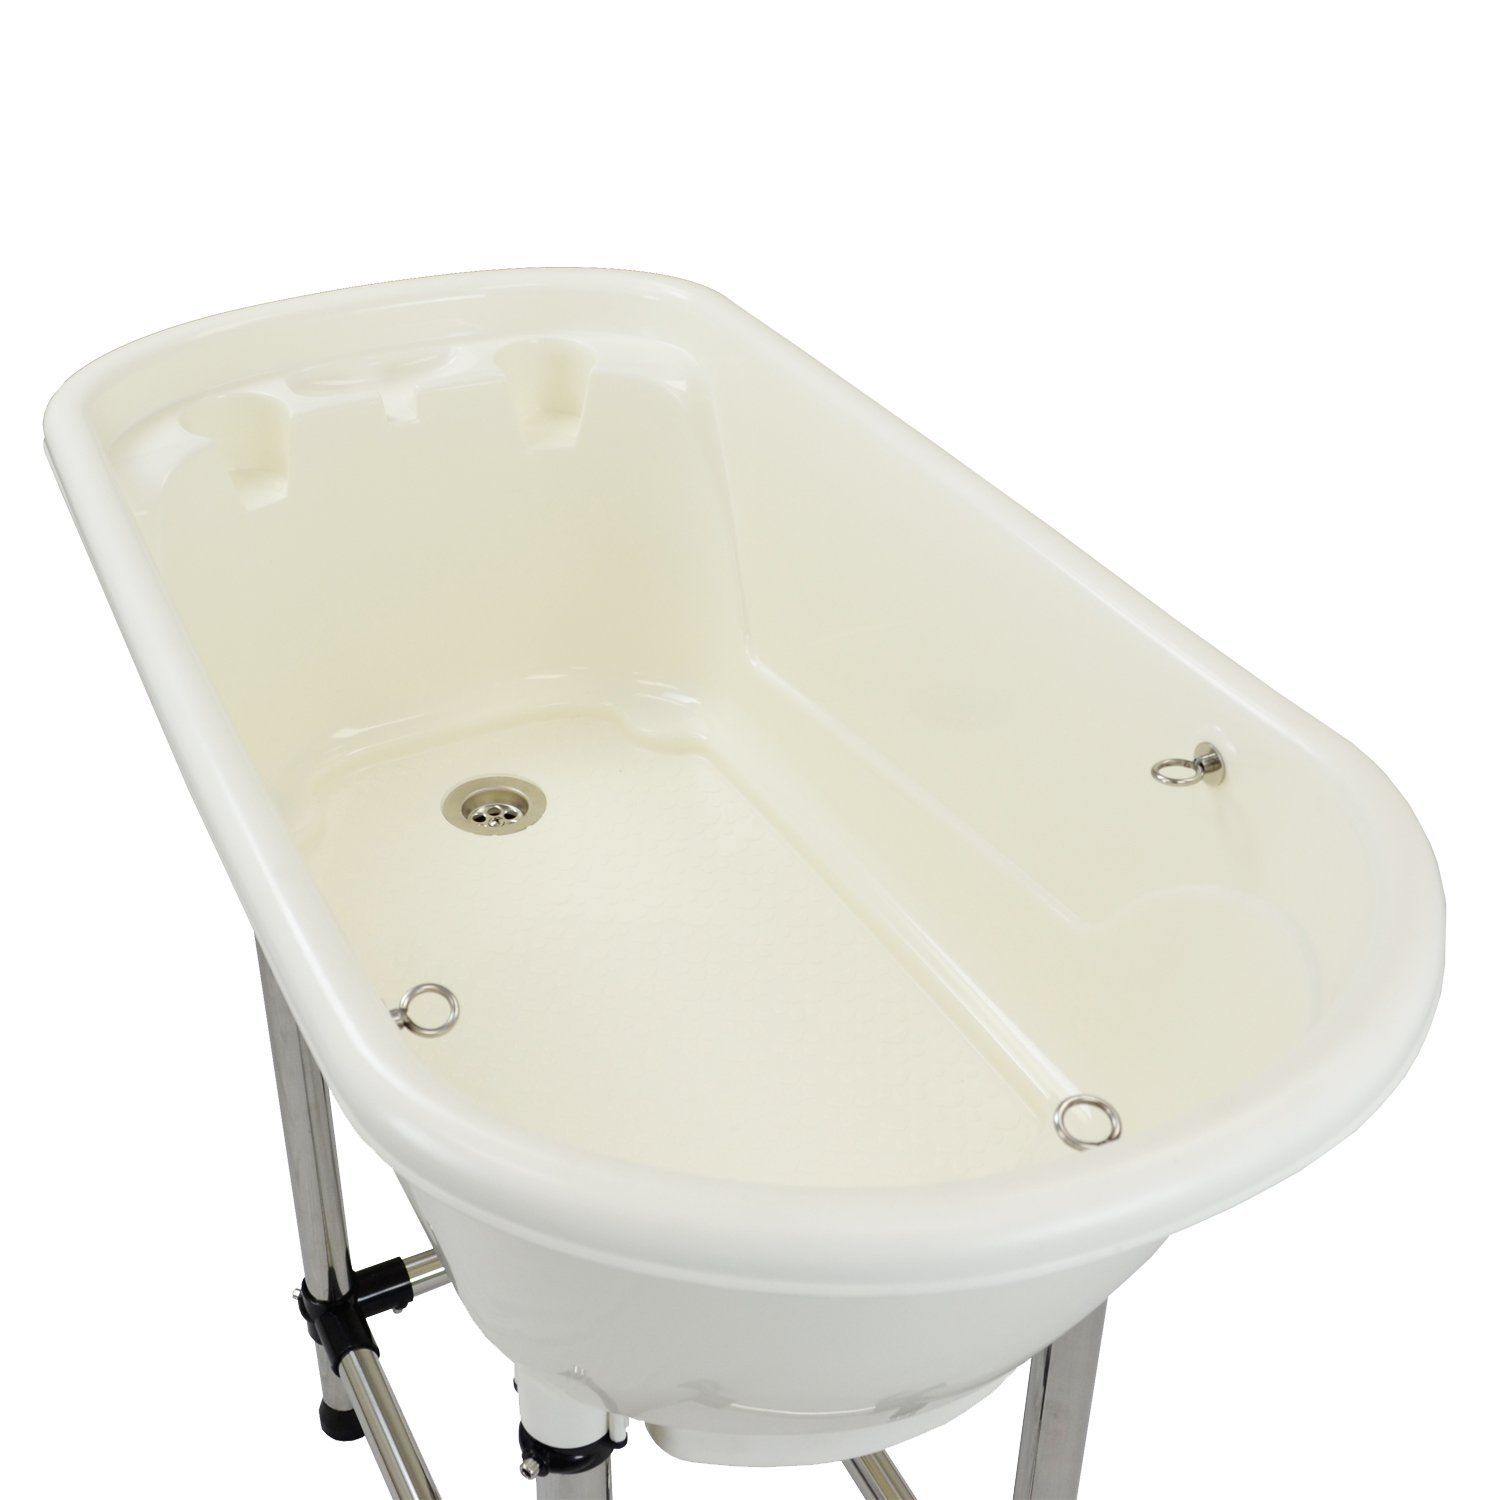 Flying Pig Pet Dog Cat Washing Shower Grooming Portable Bath Tub White